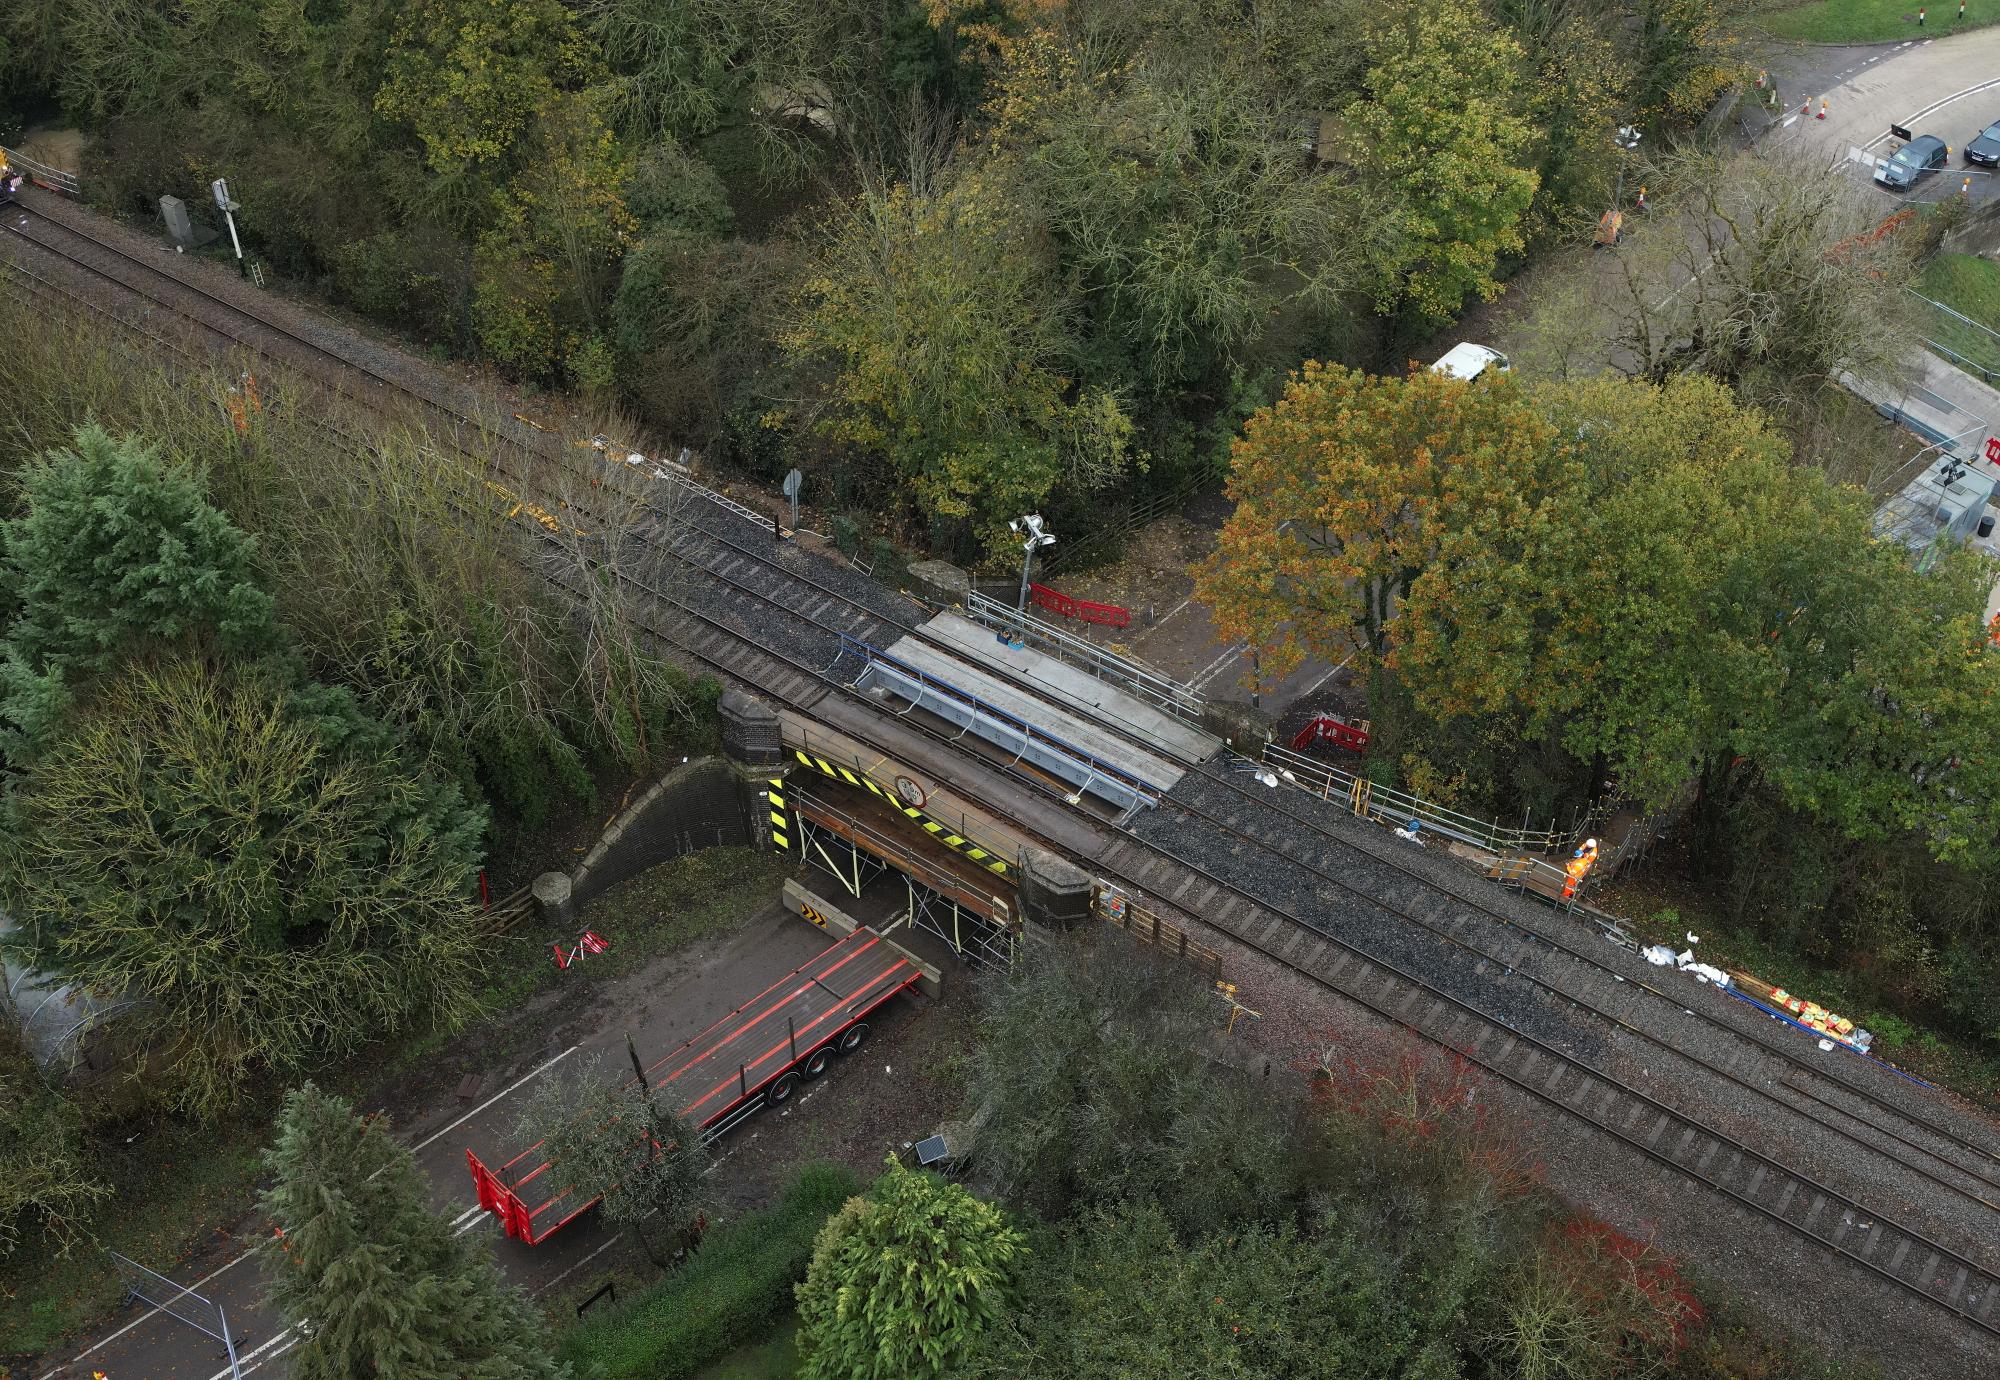 Foster bridge repaired, via Network Rail 